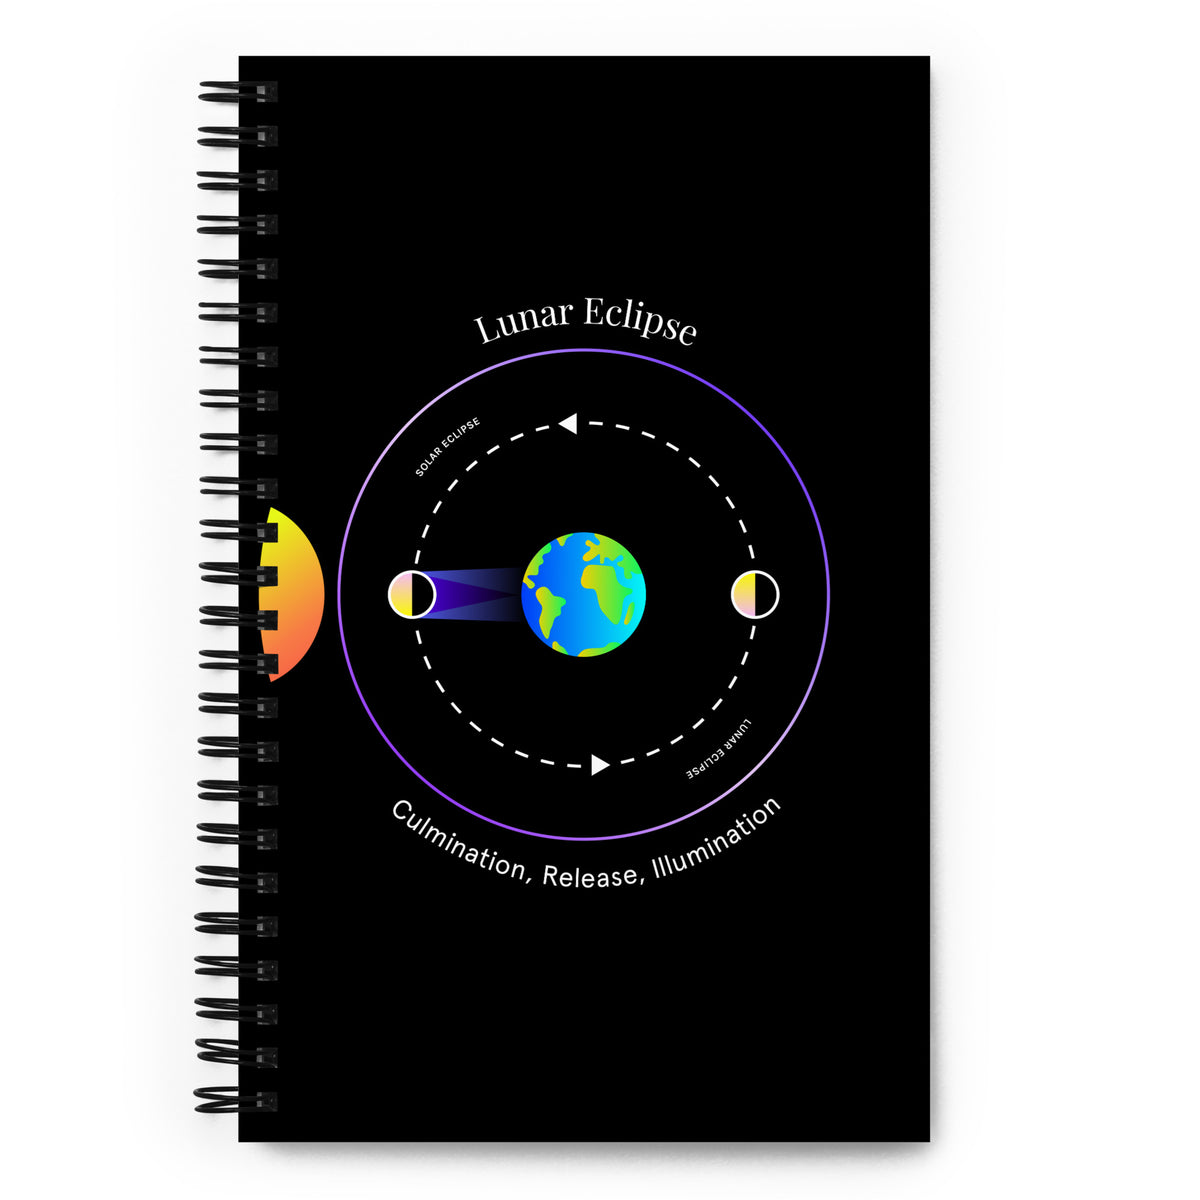 Lunar Eclipse Journal